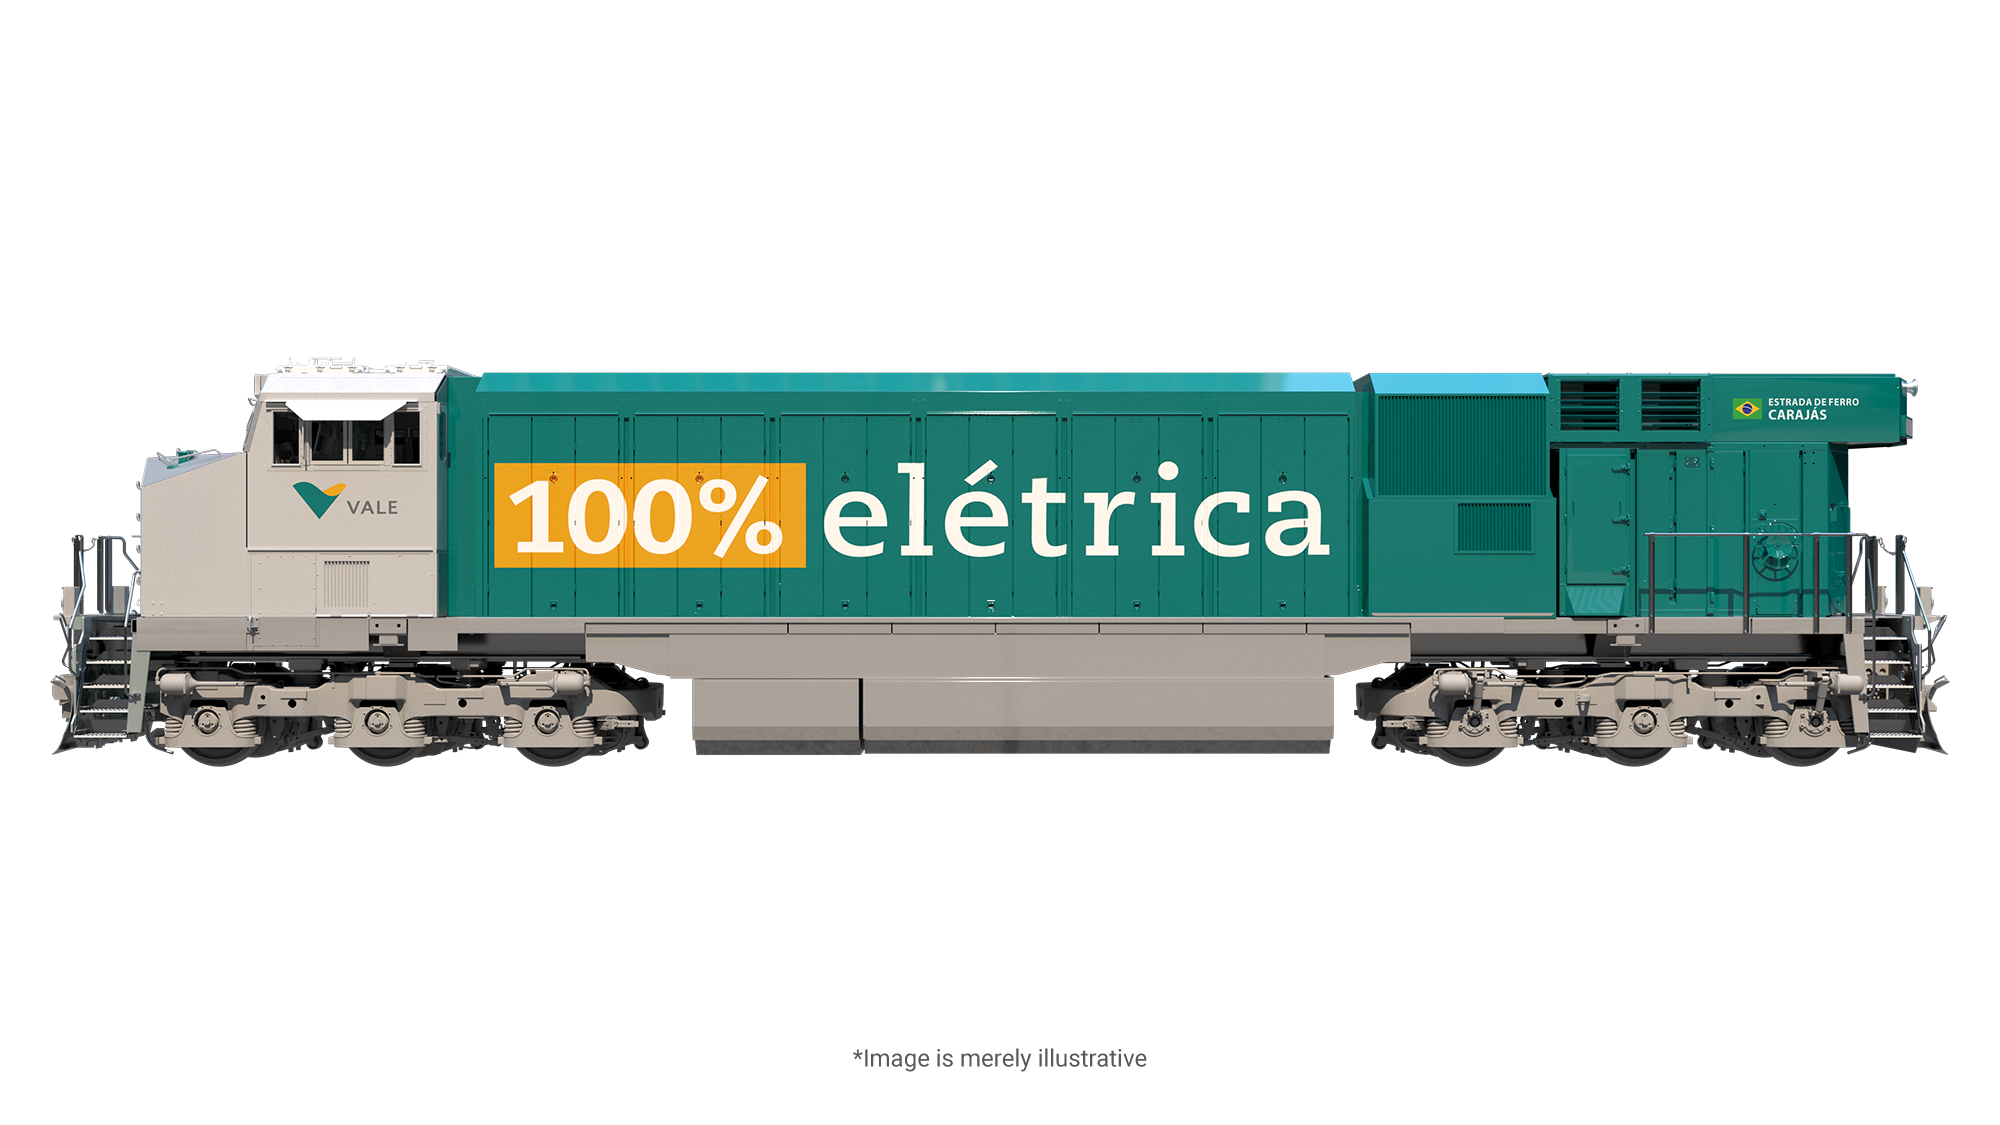 FLXdrive™ Battery-Electric Locomotive│Wabtec Corporation